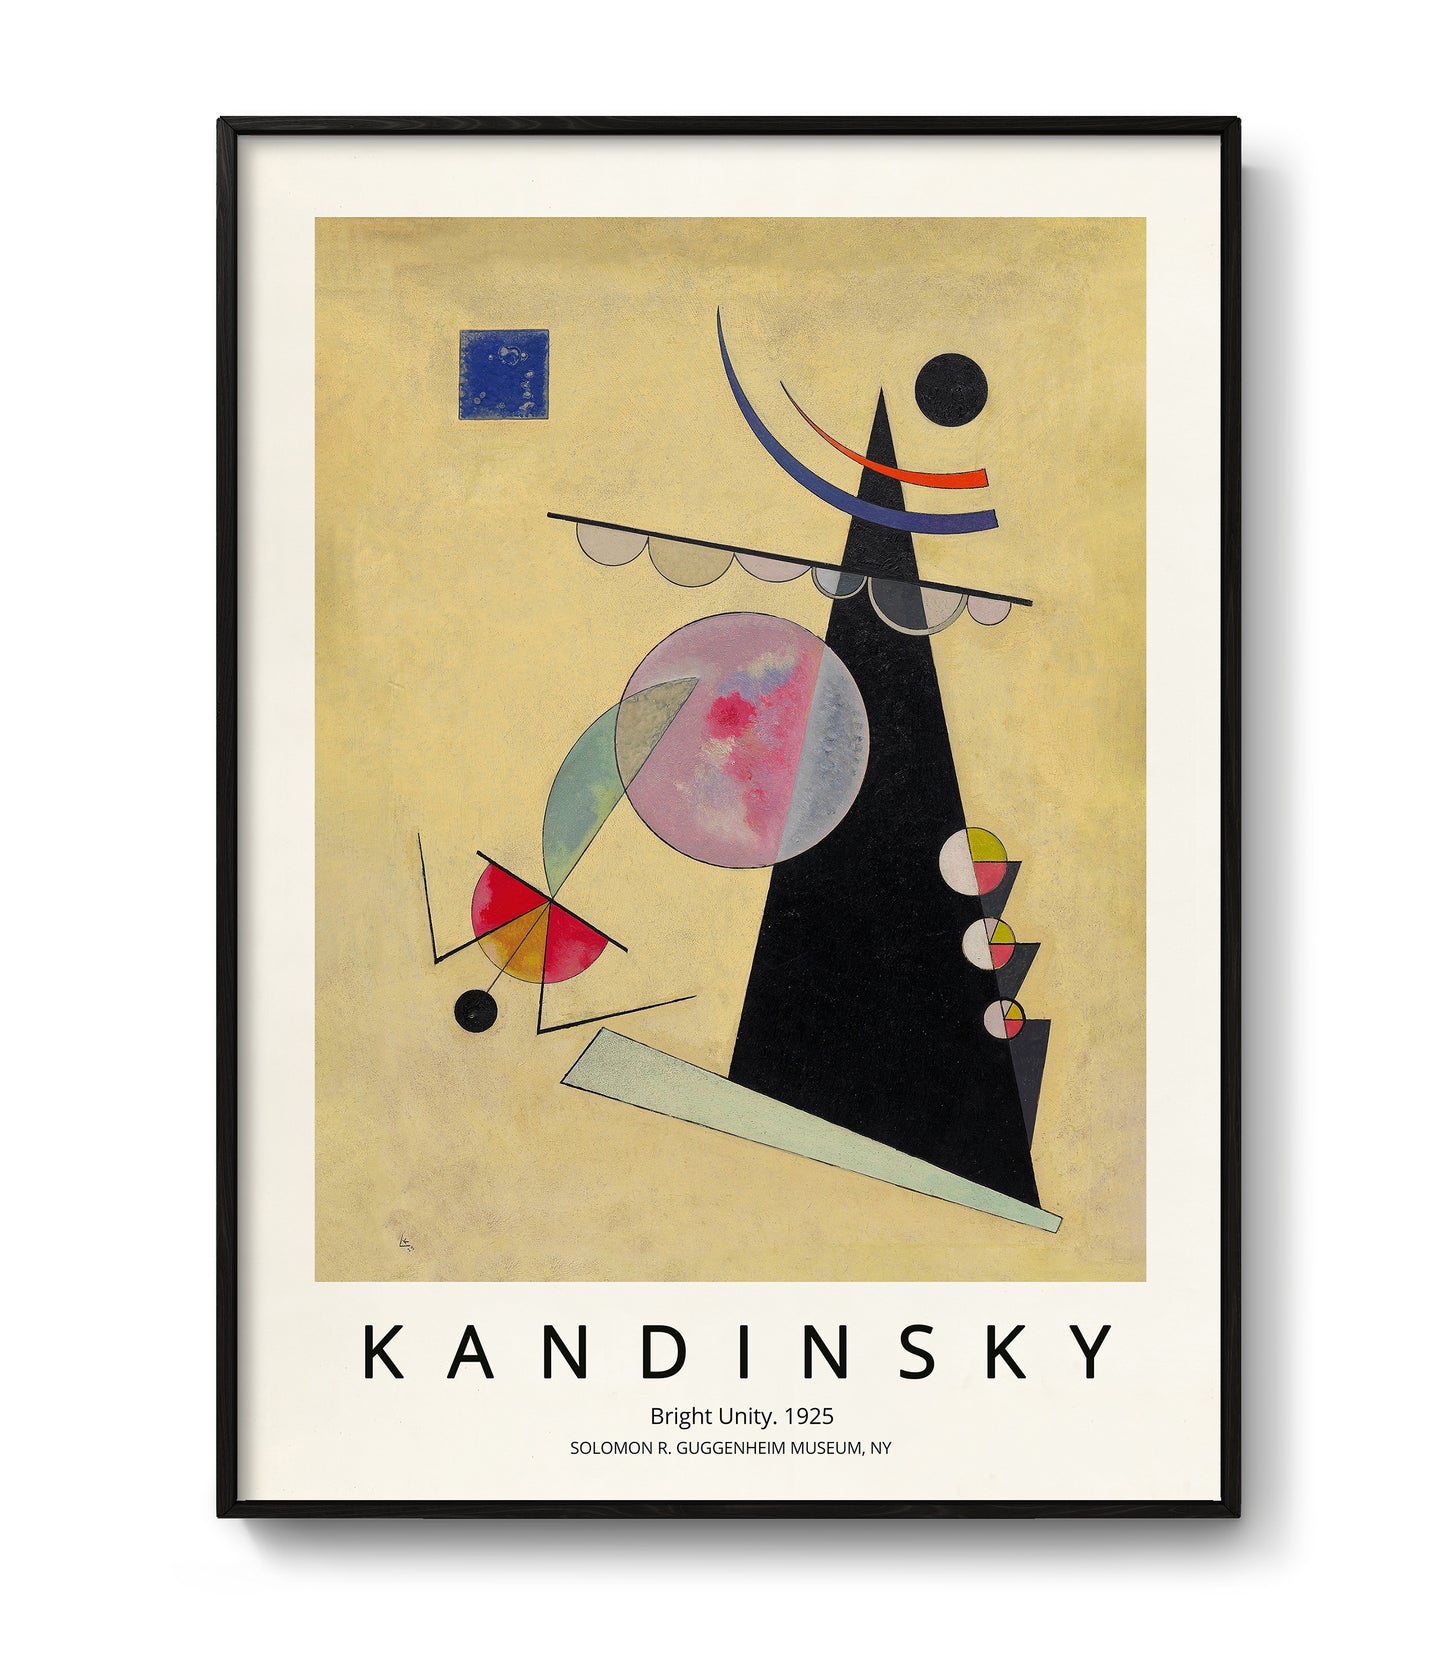 Bright Unity by Kandinsky, 1925